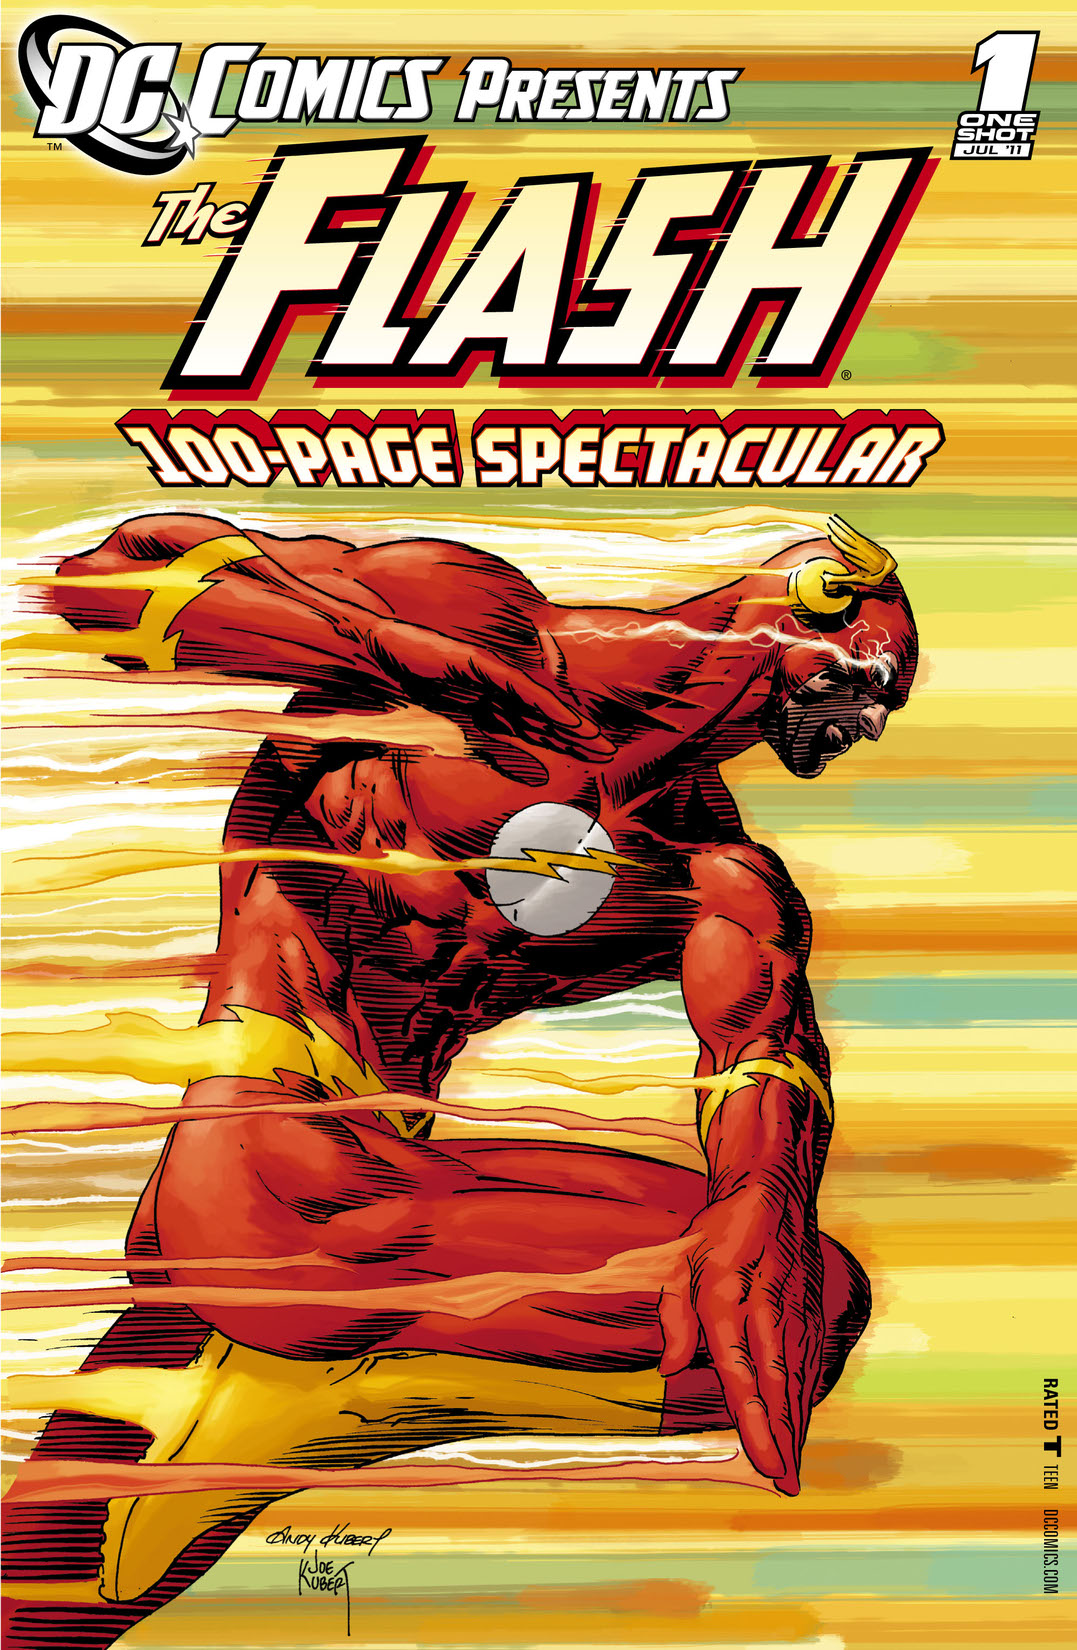 DC Comics Presents: The Flash (2011-) #1 preview images